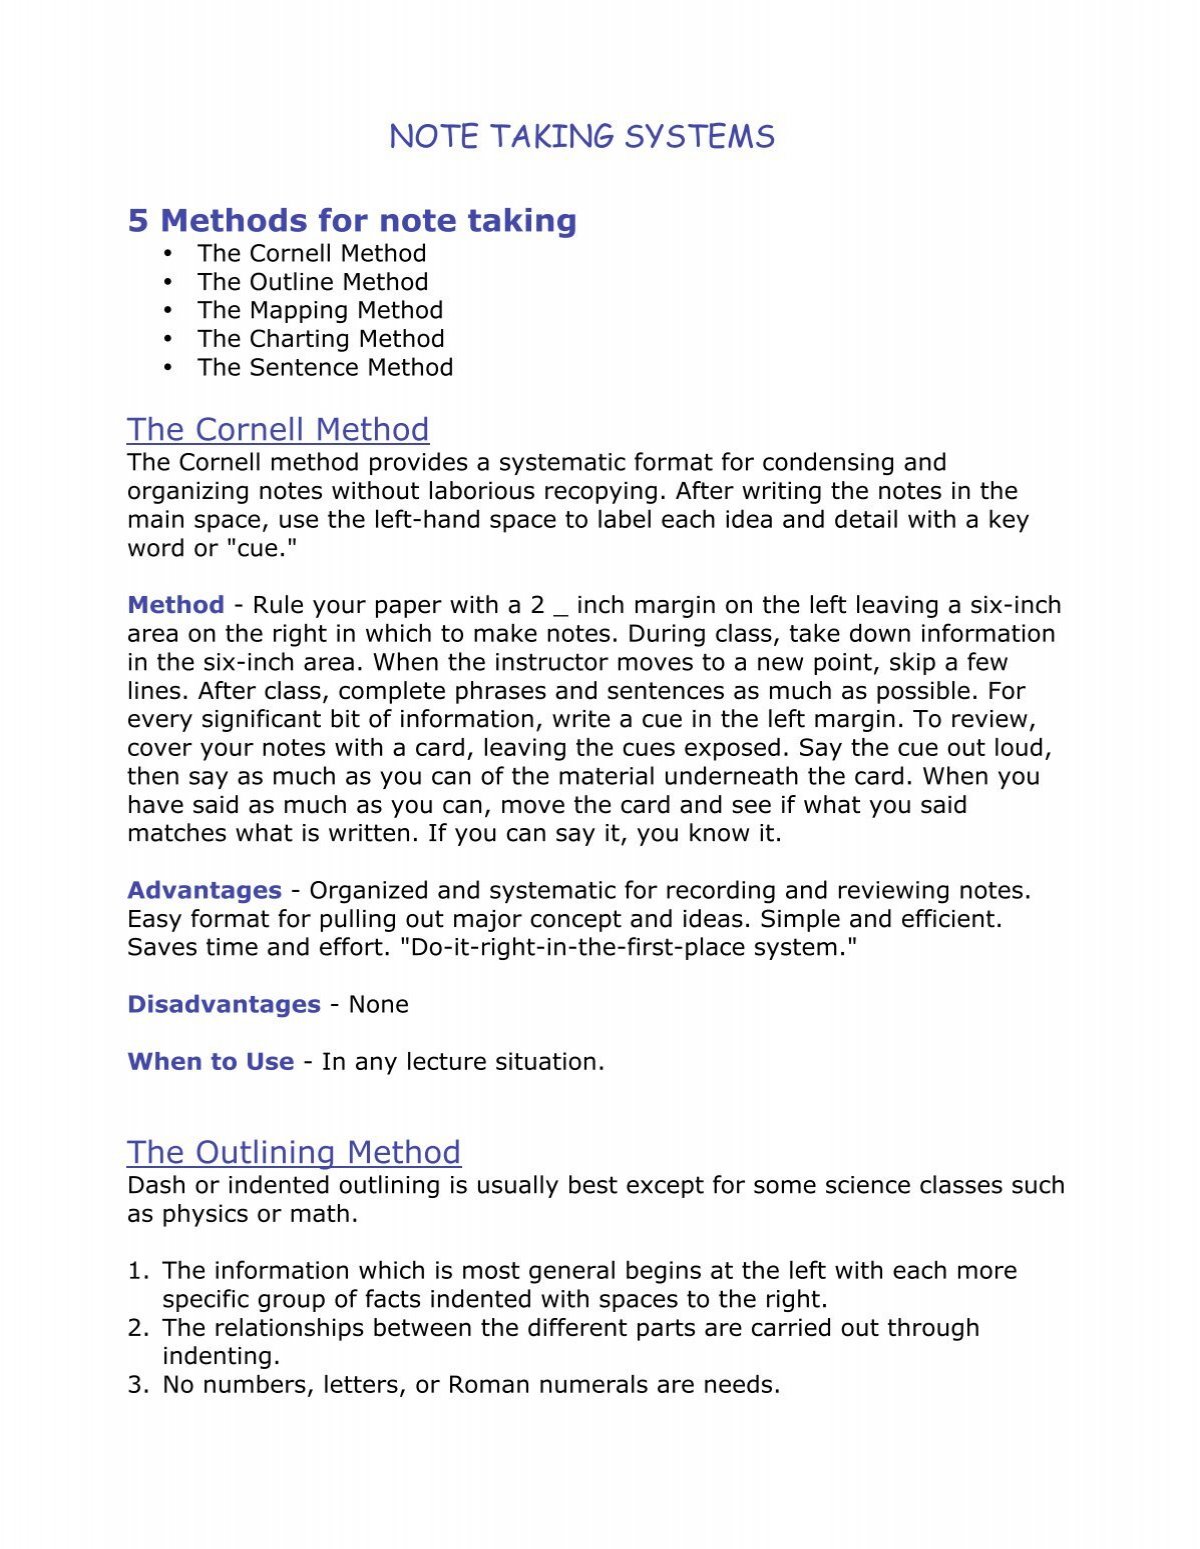 5 methods of note-taking